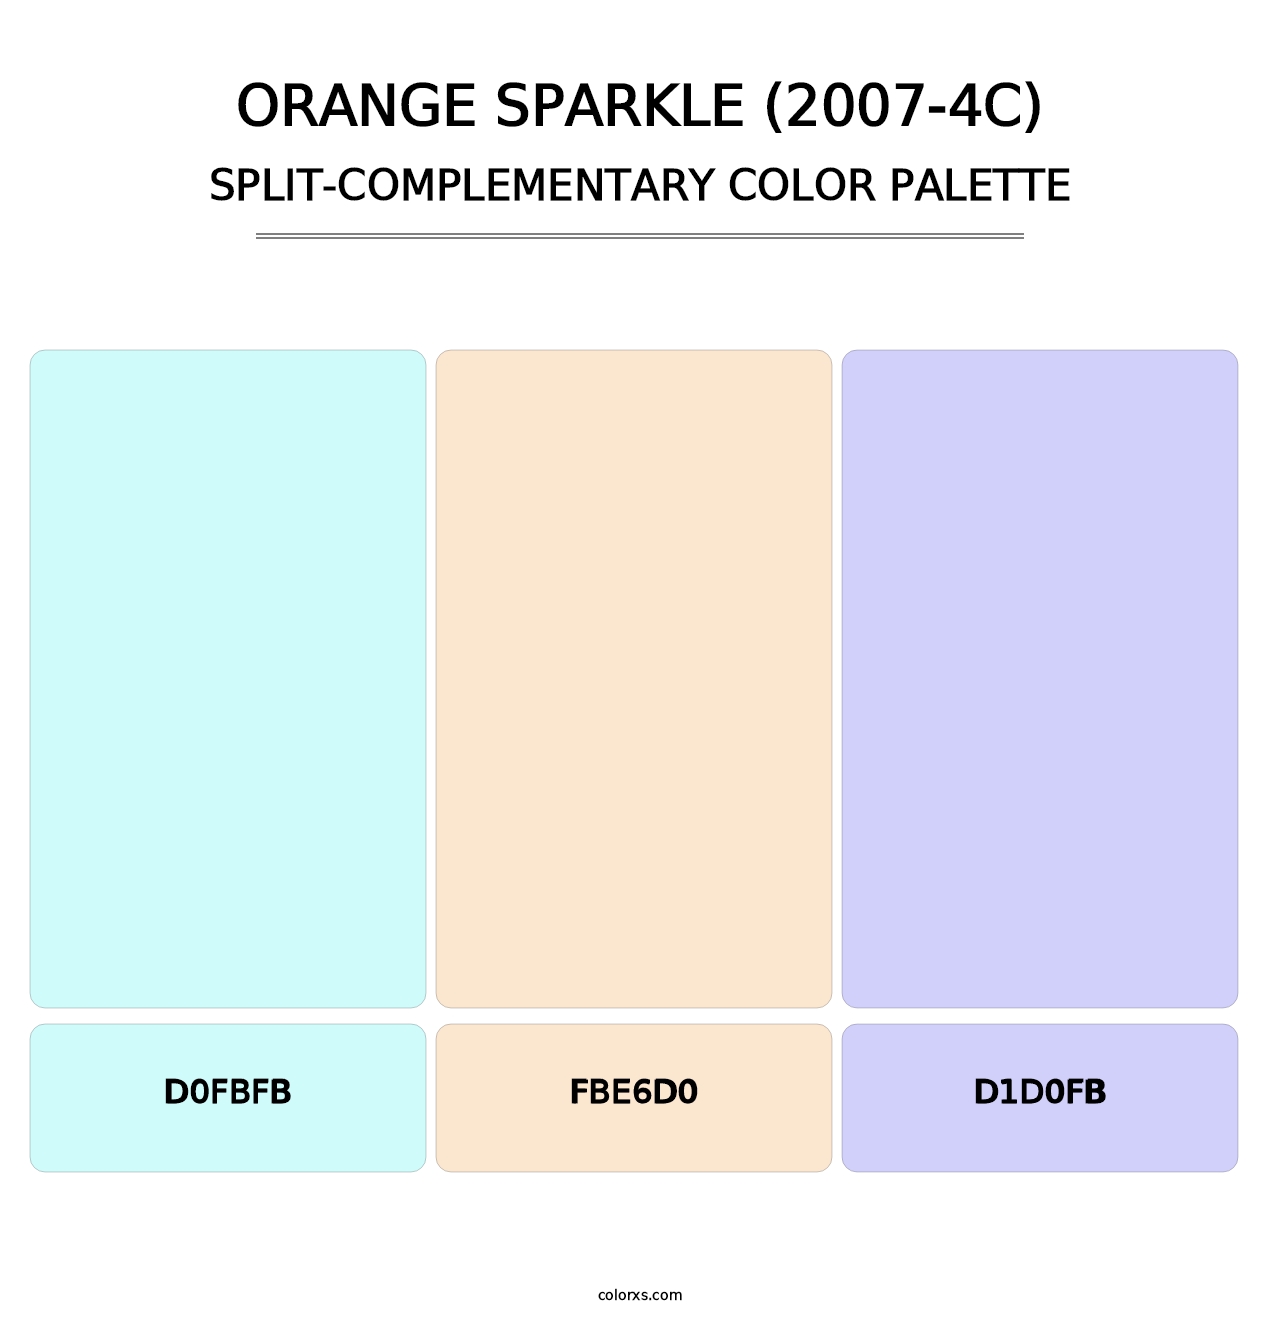 Orange Sparkle (2007-4C) - Split-Complementary Color Palette